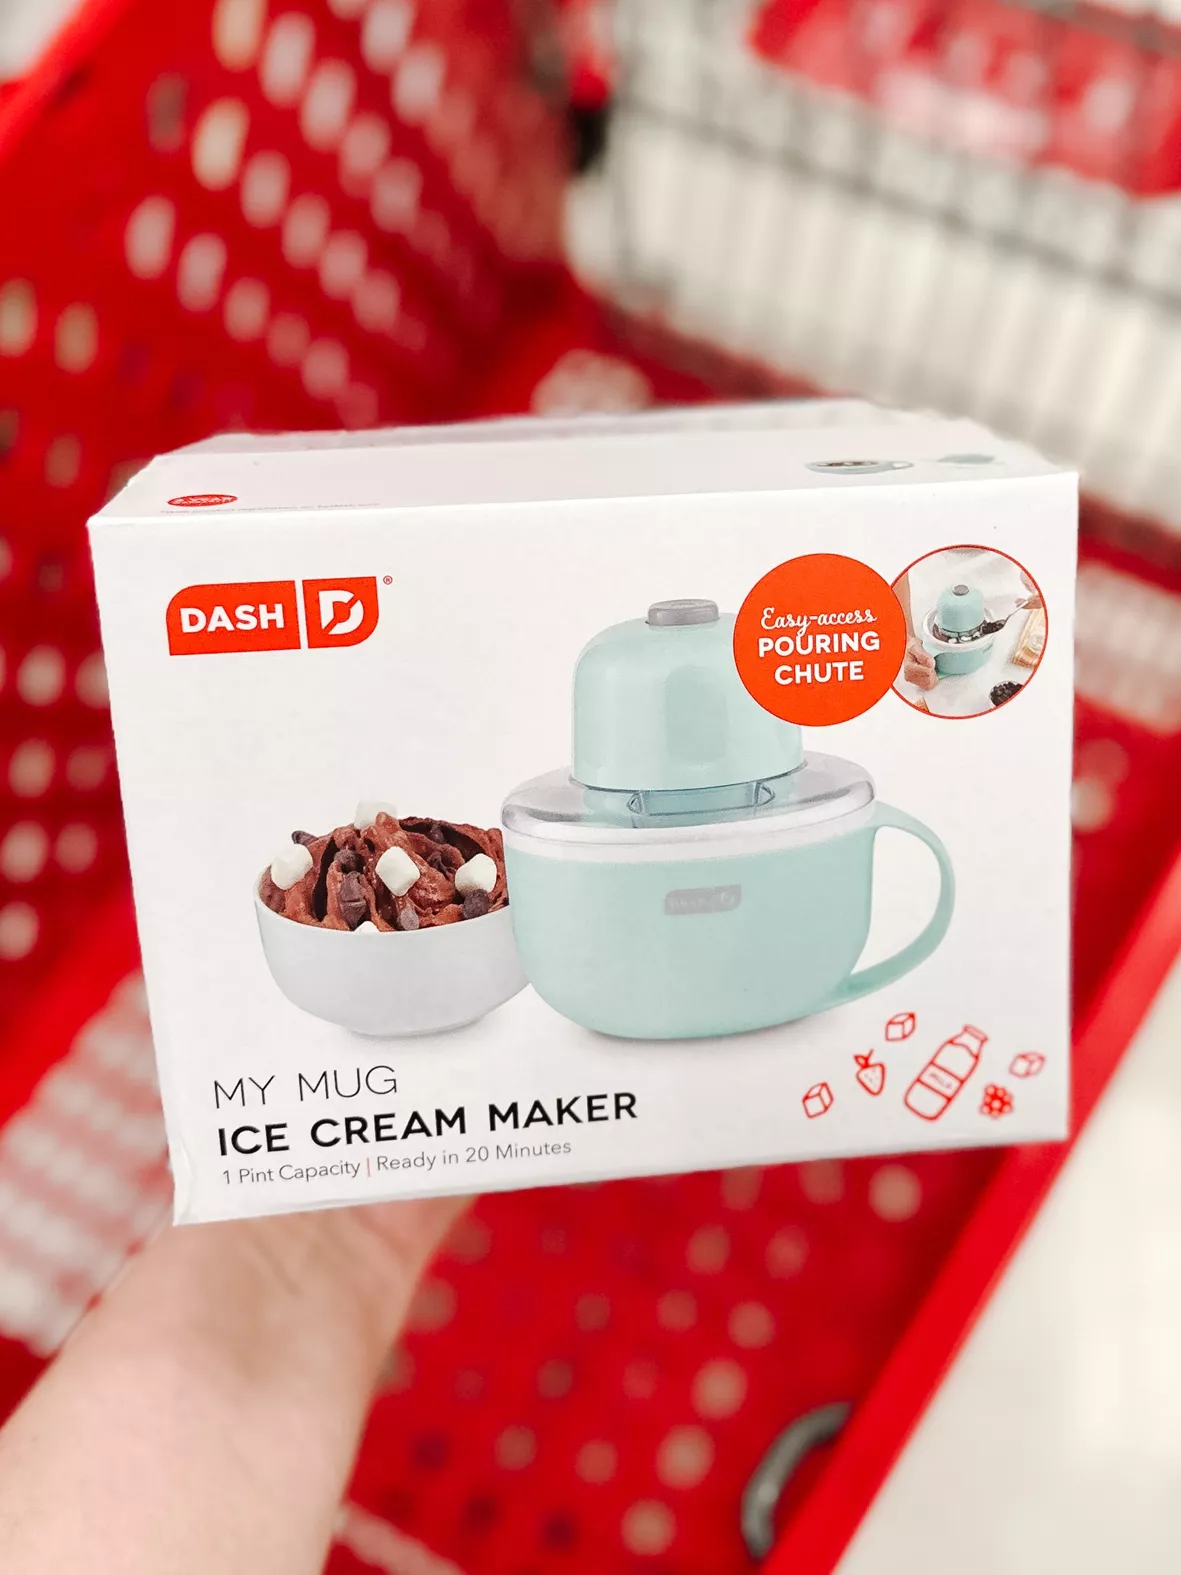 Dash My Mug Ice Cream Maker